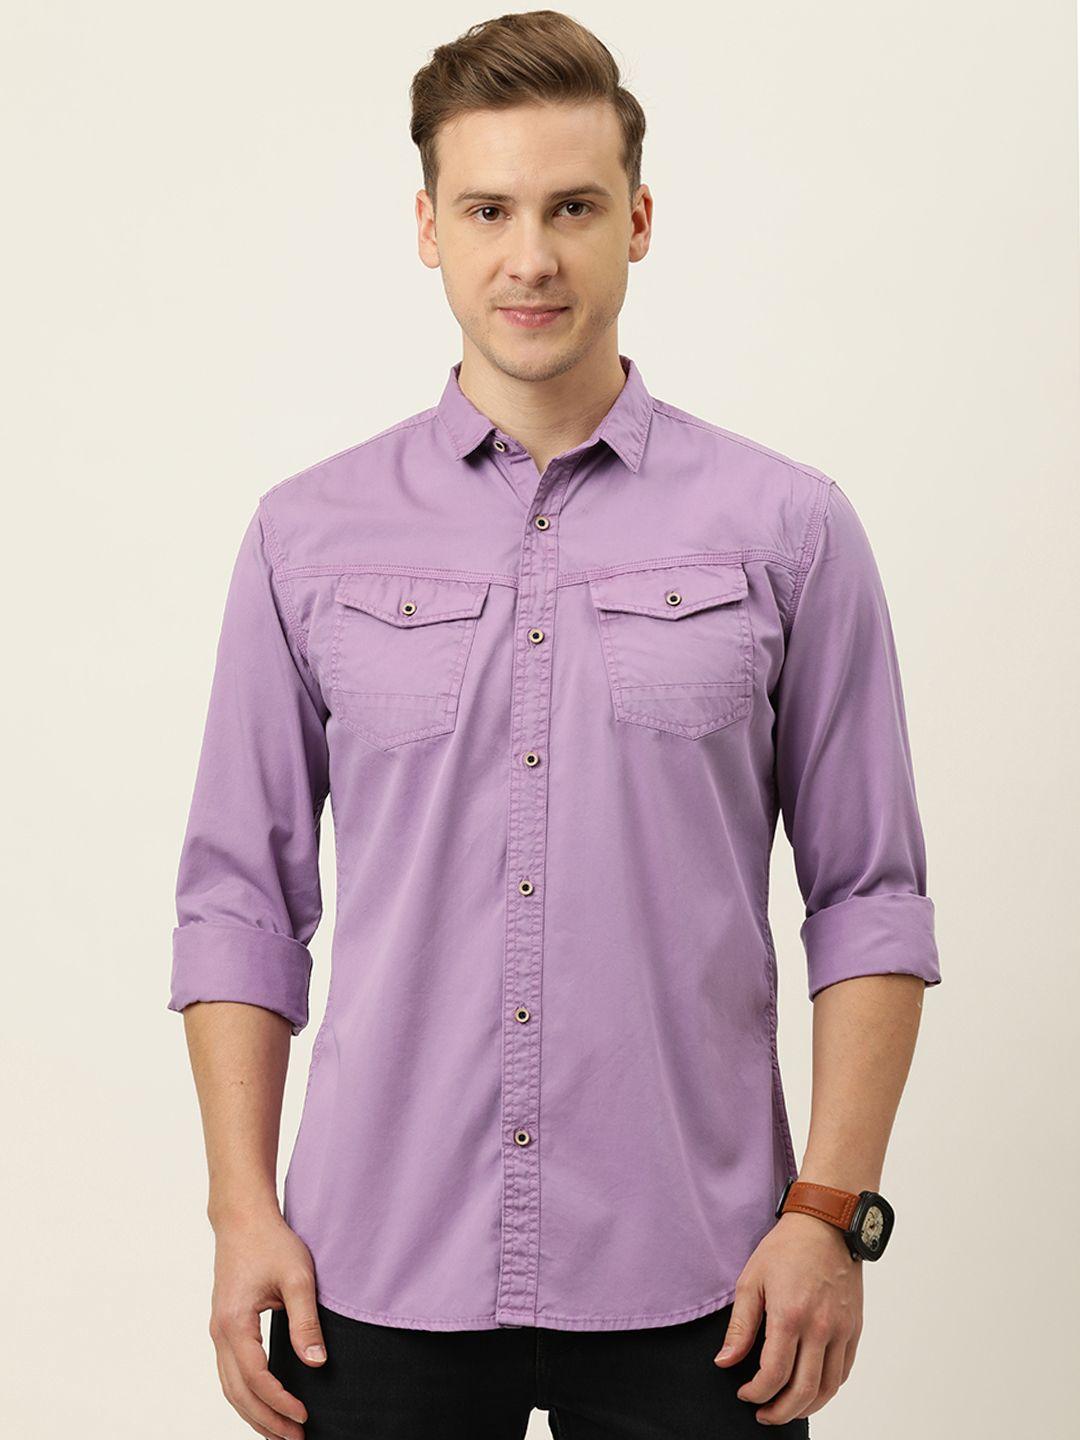 ivoc-men-lavender-solid-slim-fit-casual-shirt